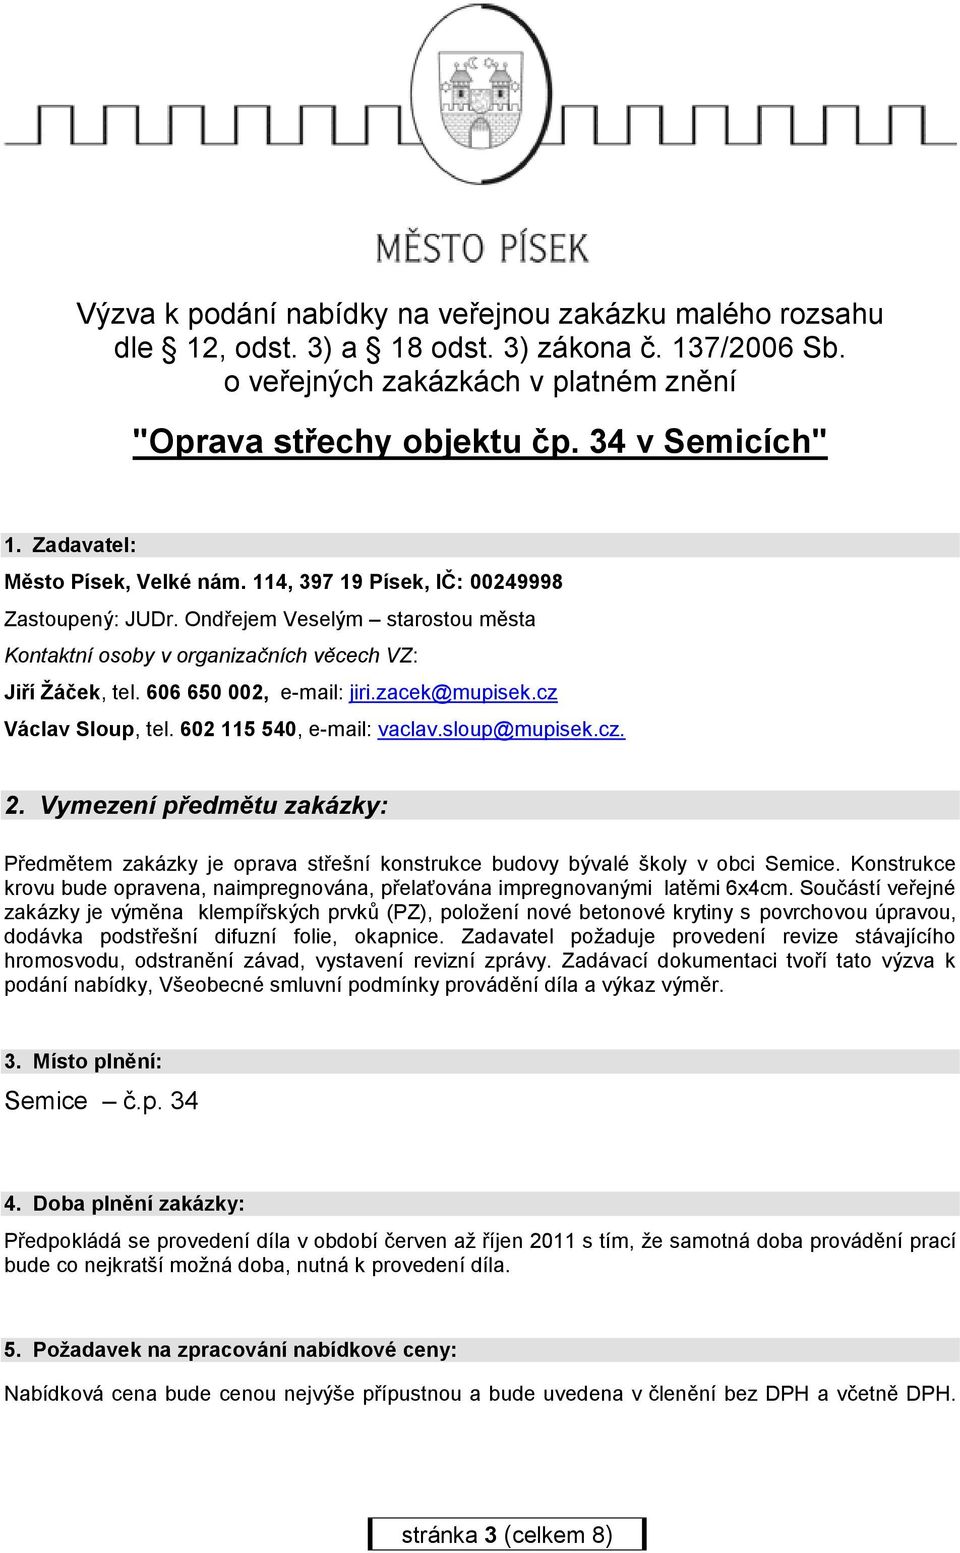 606 650 002, e-mail: jiri.zacek@mupisek.cz Václav Sloup, tel. 602 115 540, e-mail: vaclav.sloup@mupisek.cz. 2.